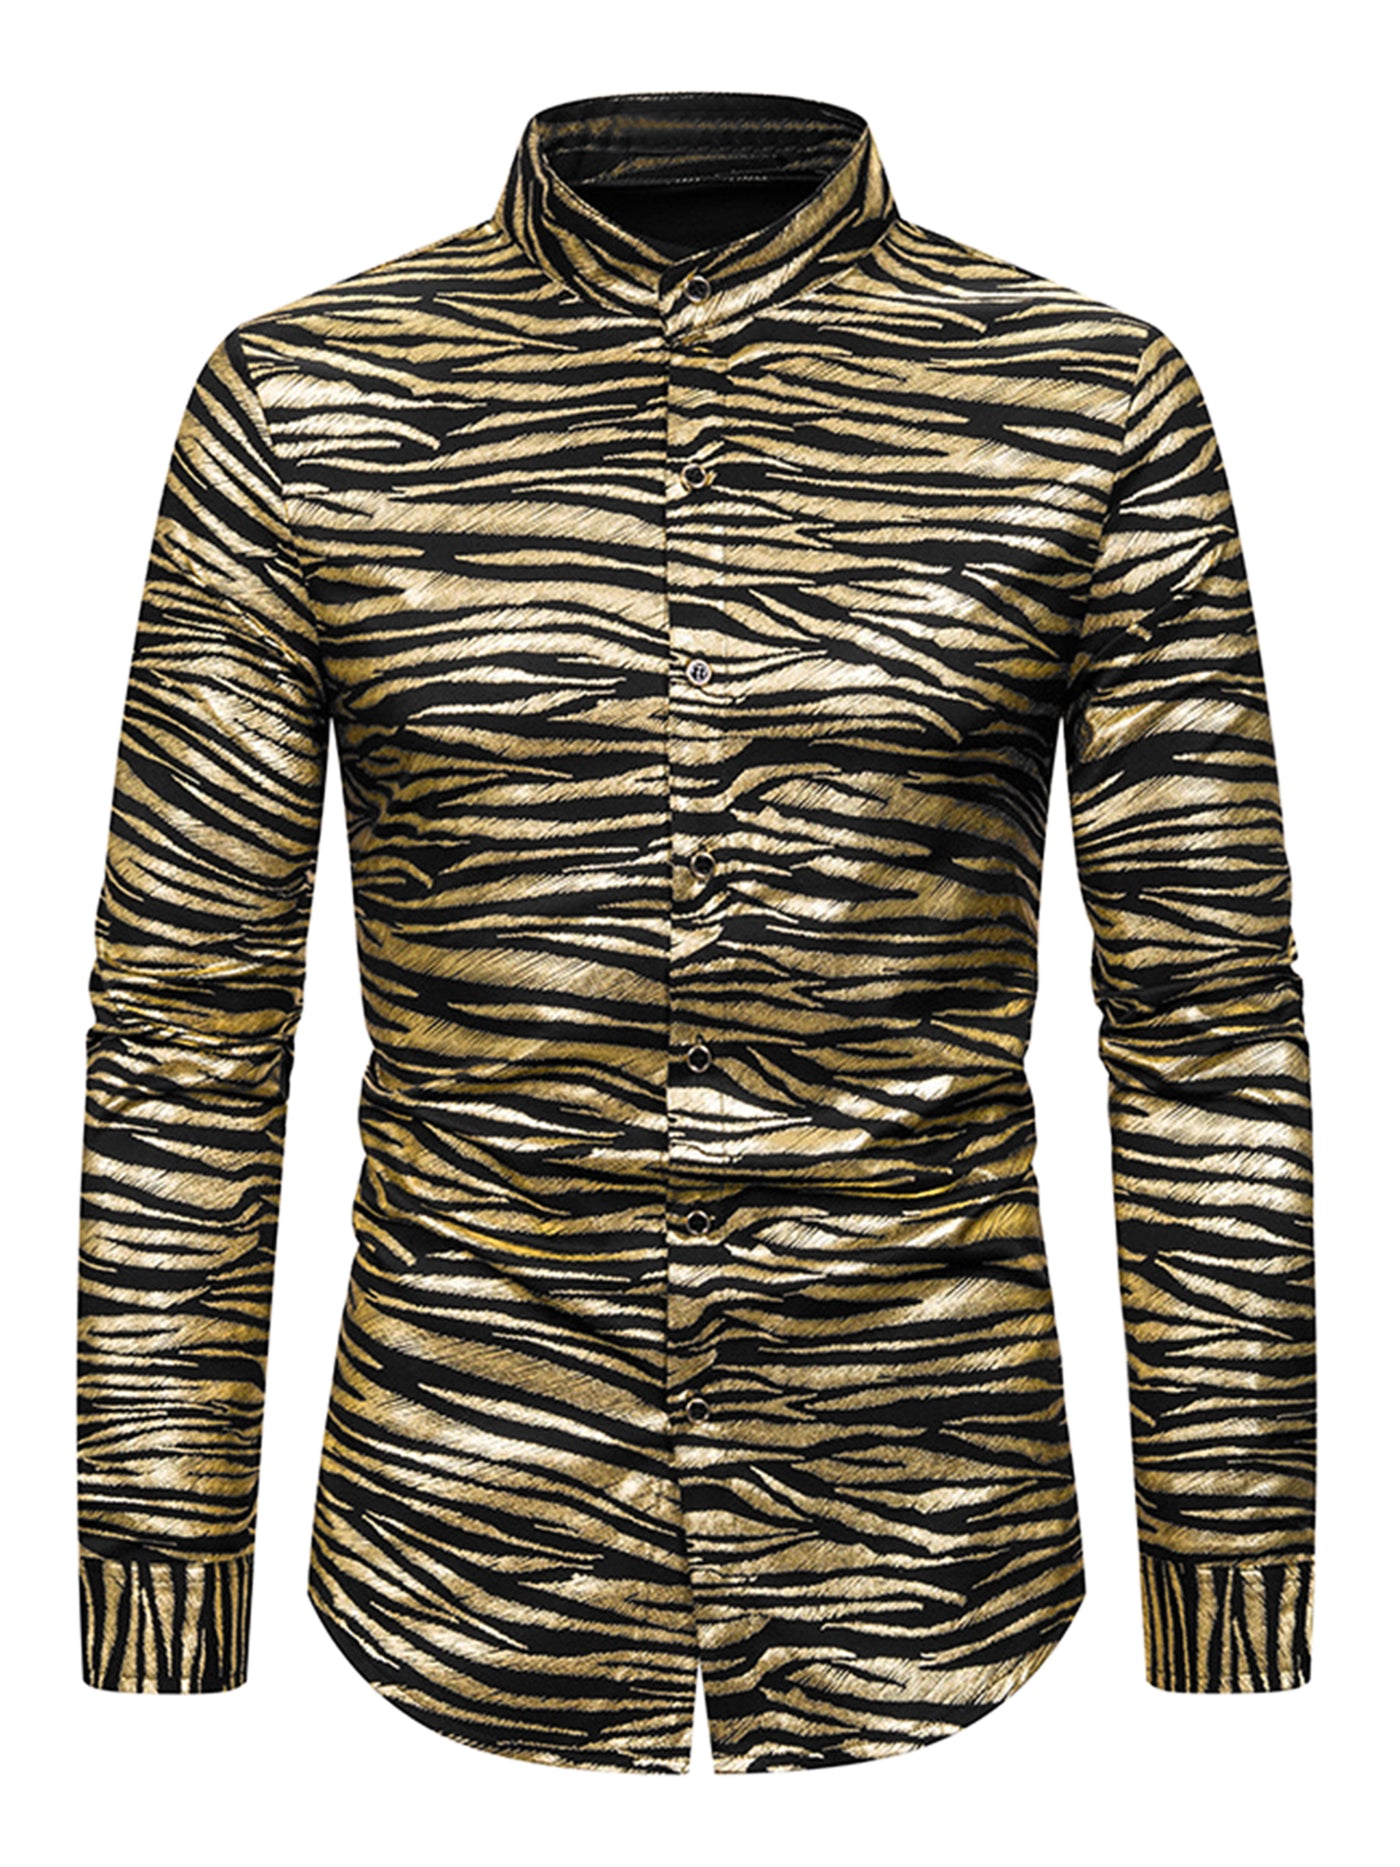 Bublédon Men's Animal Printed Shirts Long Sleeves Button Down Party Dress Shirt